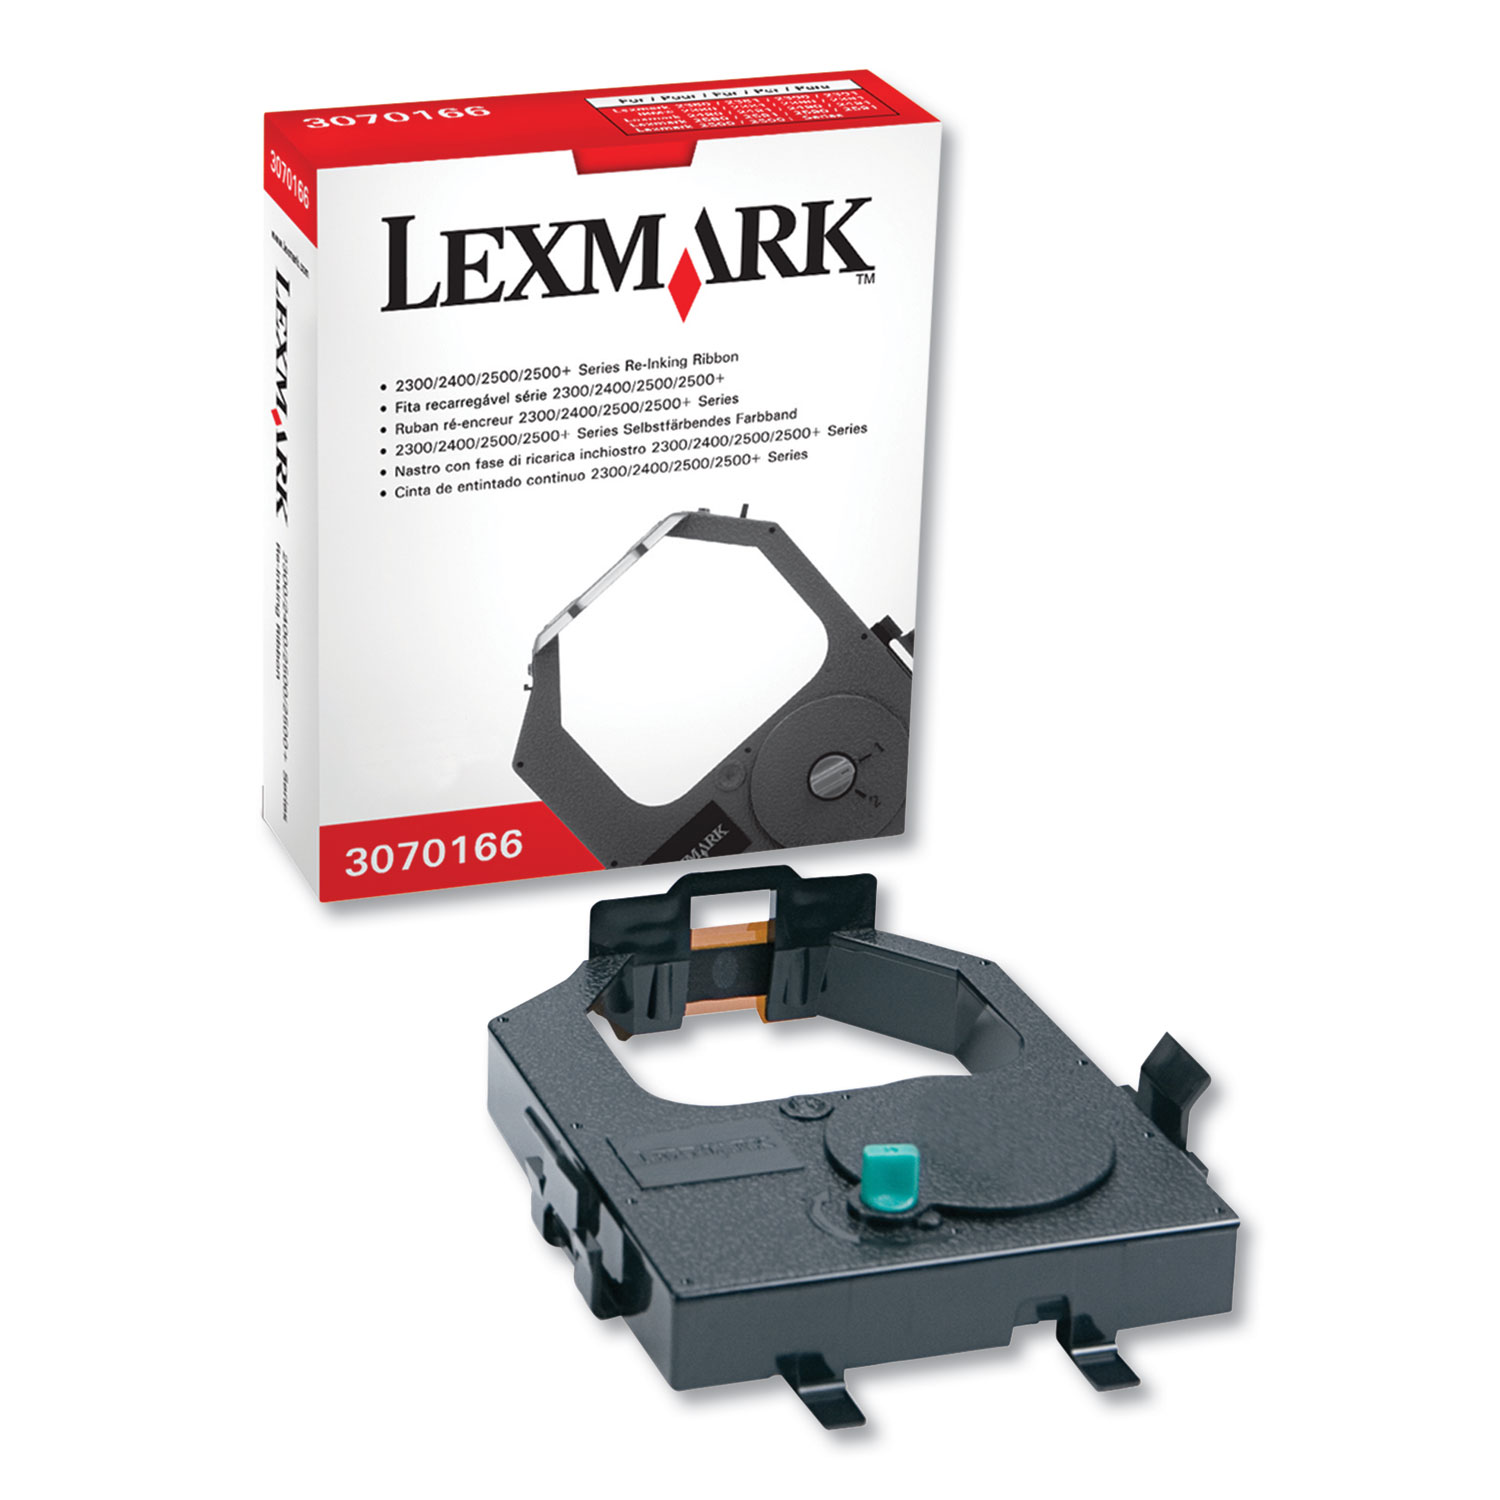  Lexmark 3070166 Correction Ribbon, Black, 4000000 Yield (LEX3070166) 